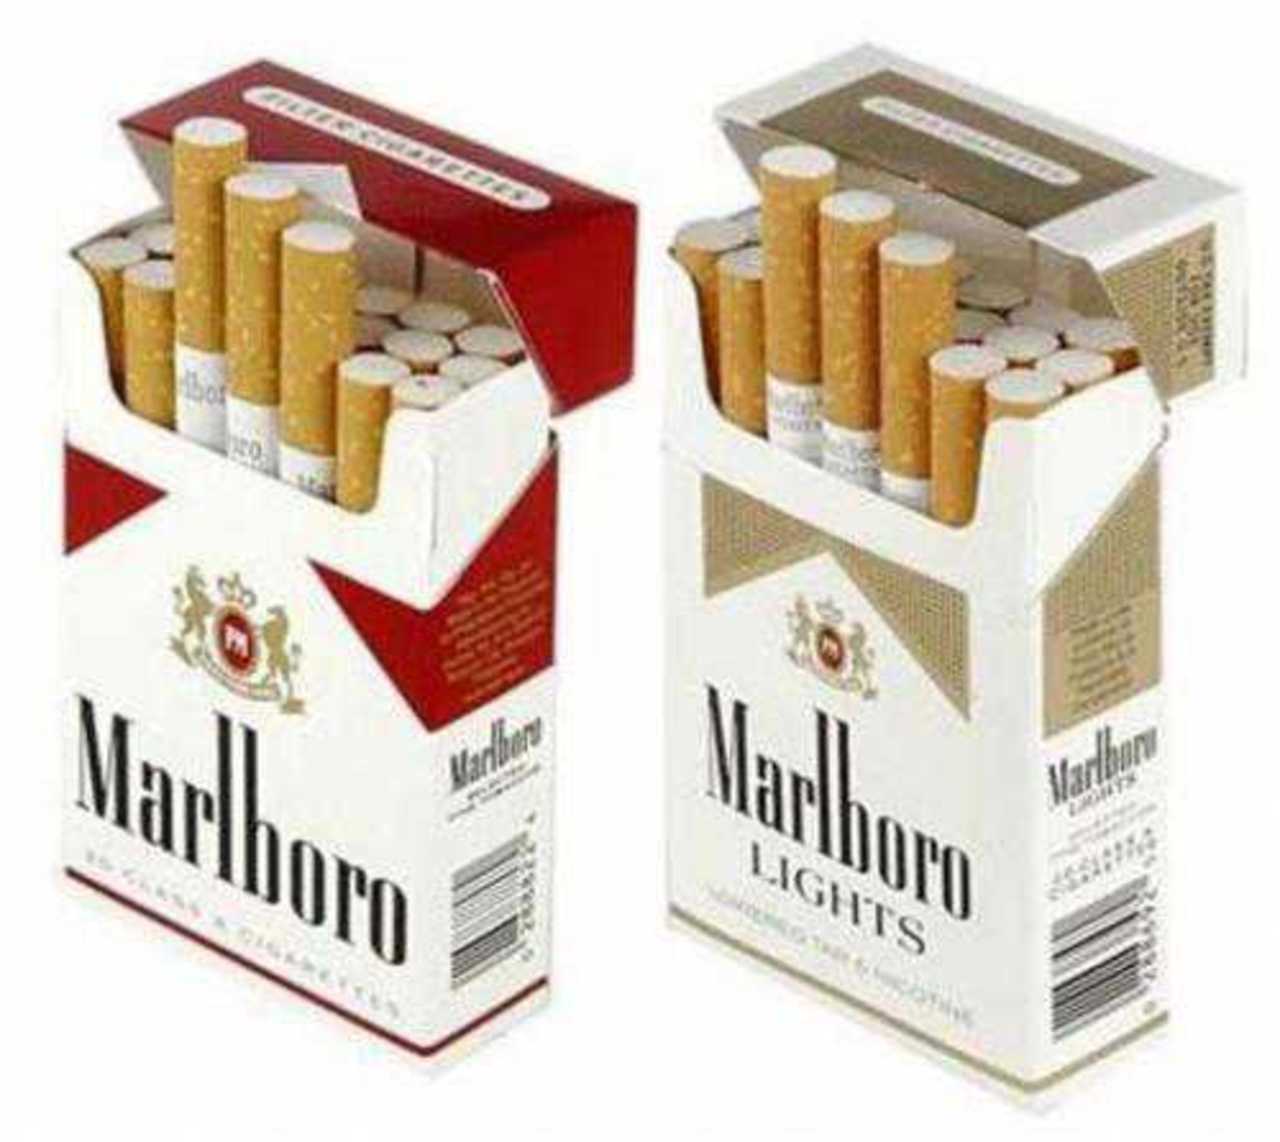 Мальбора. Мальборо ред и Голд. Пачка сигарет Мальборо. Сигареты Marlboro. Упаковка сигарет Мальборо.